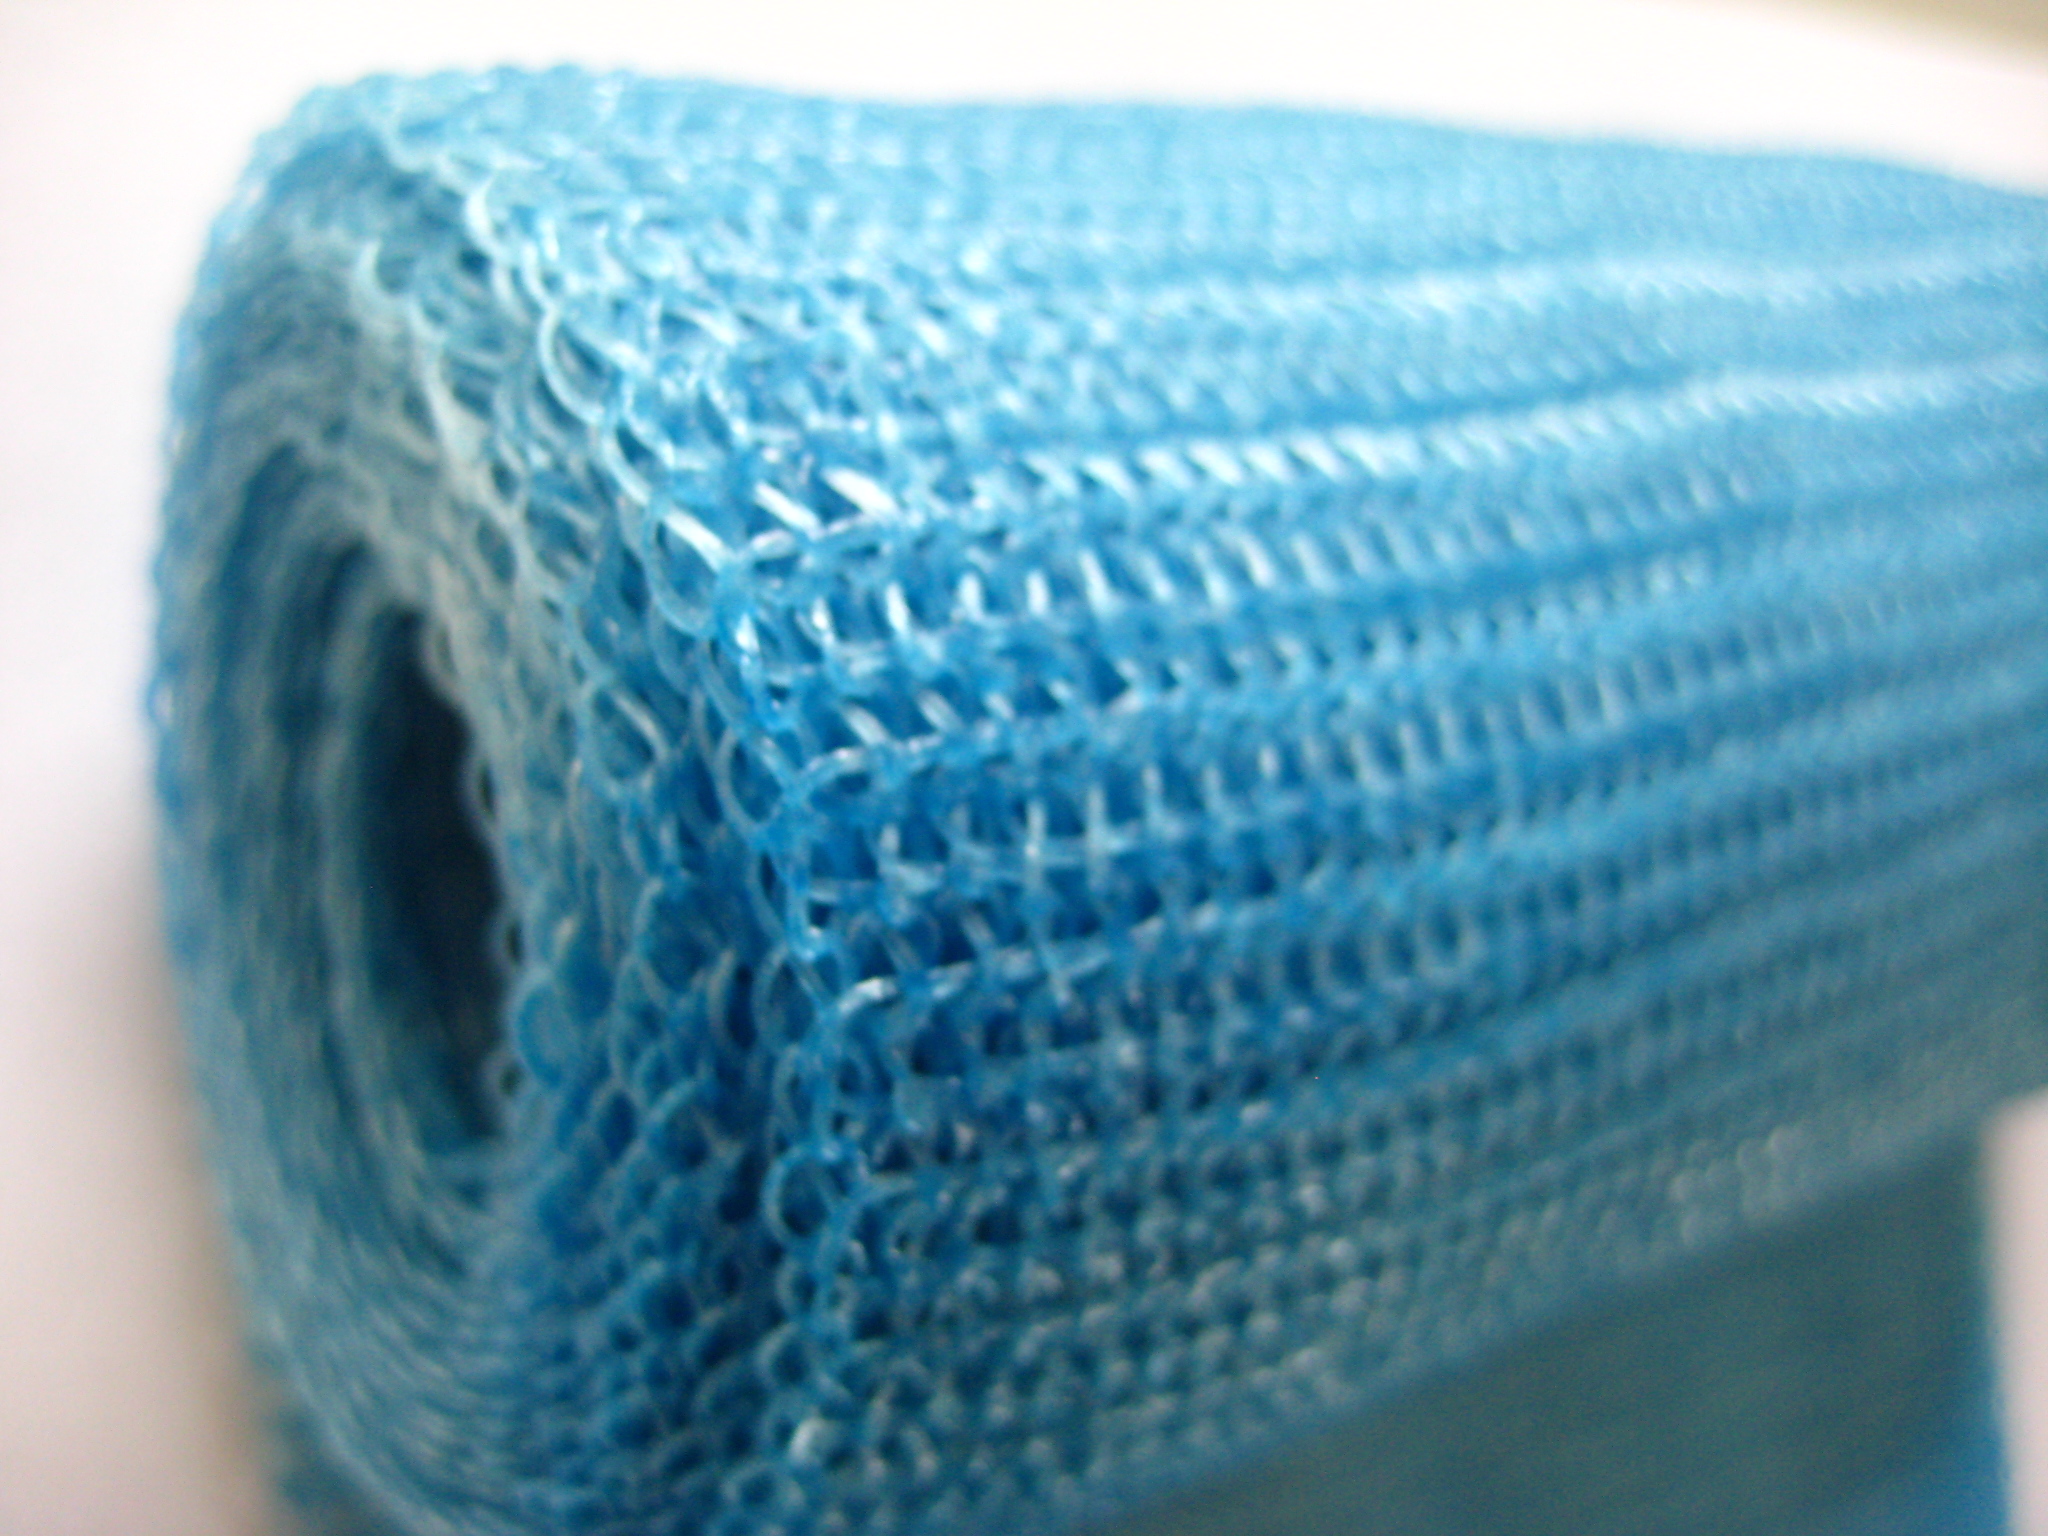 Blau hautfreundliche Orthothermoplastik zur Rehabilitation